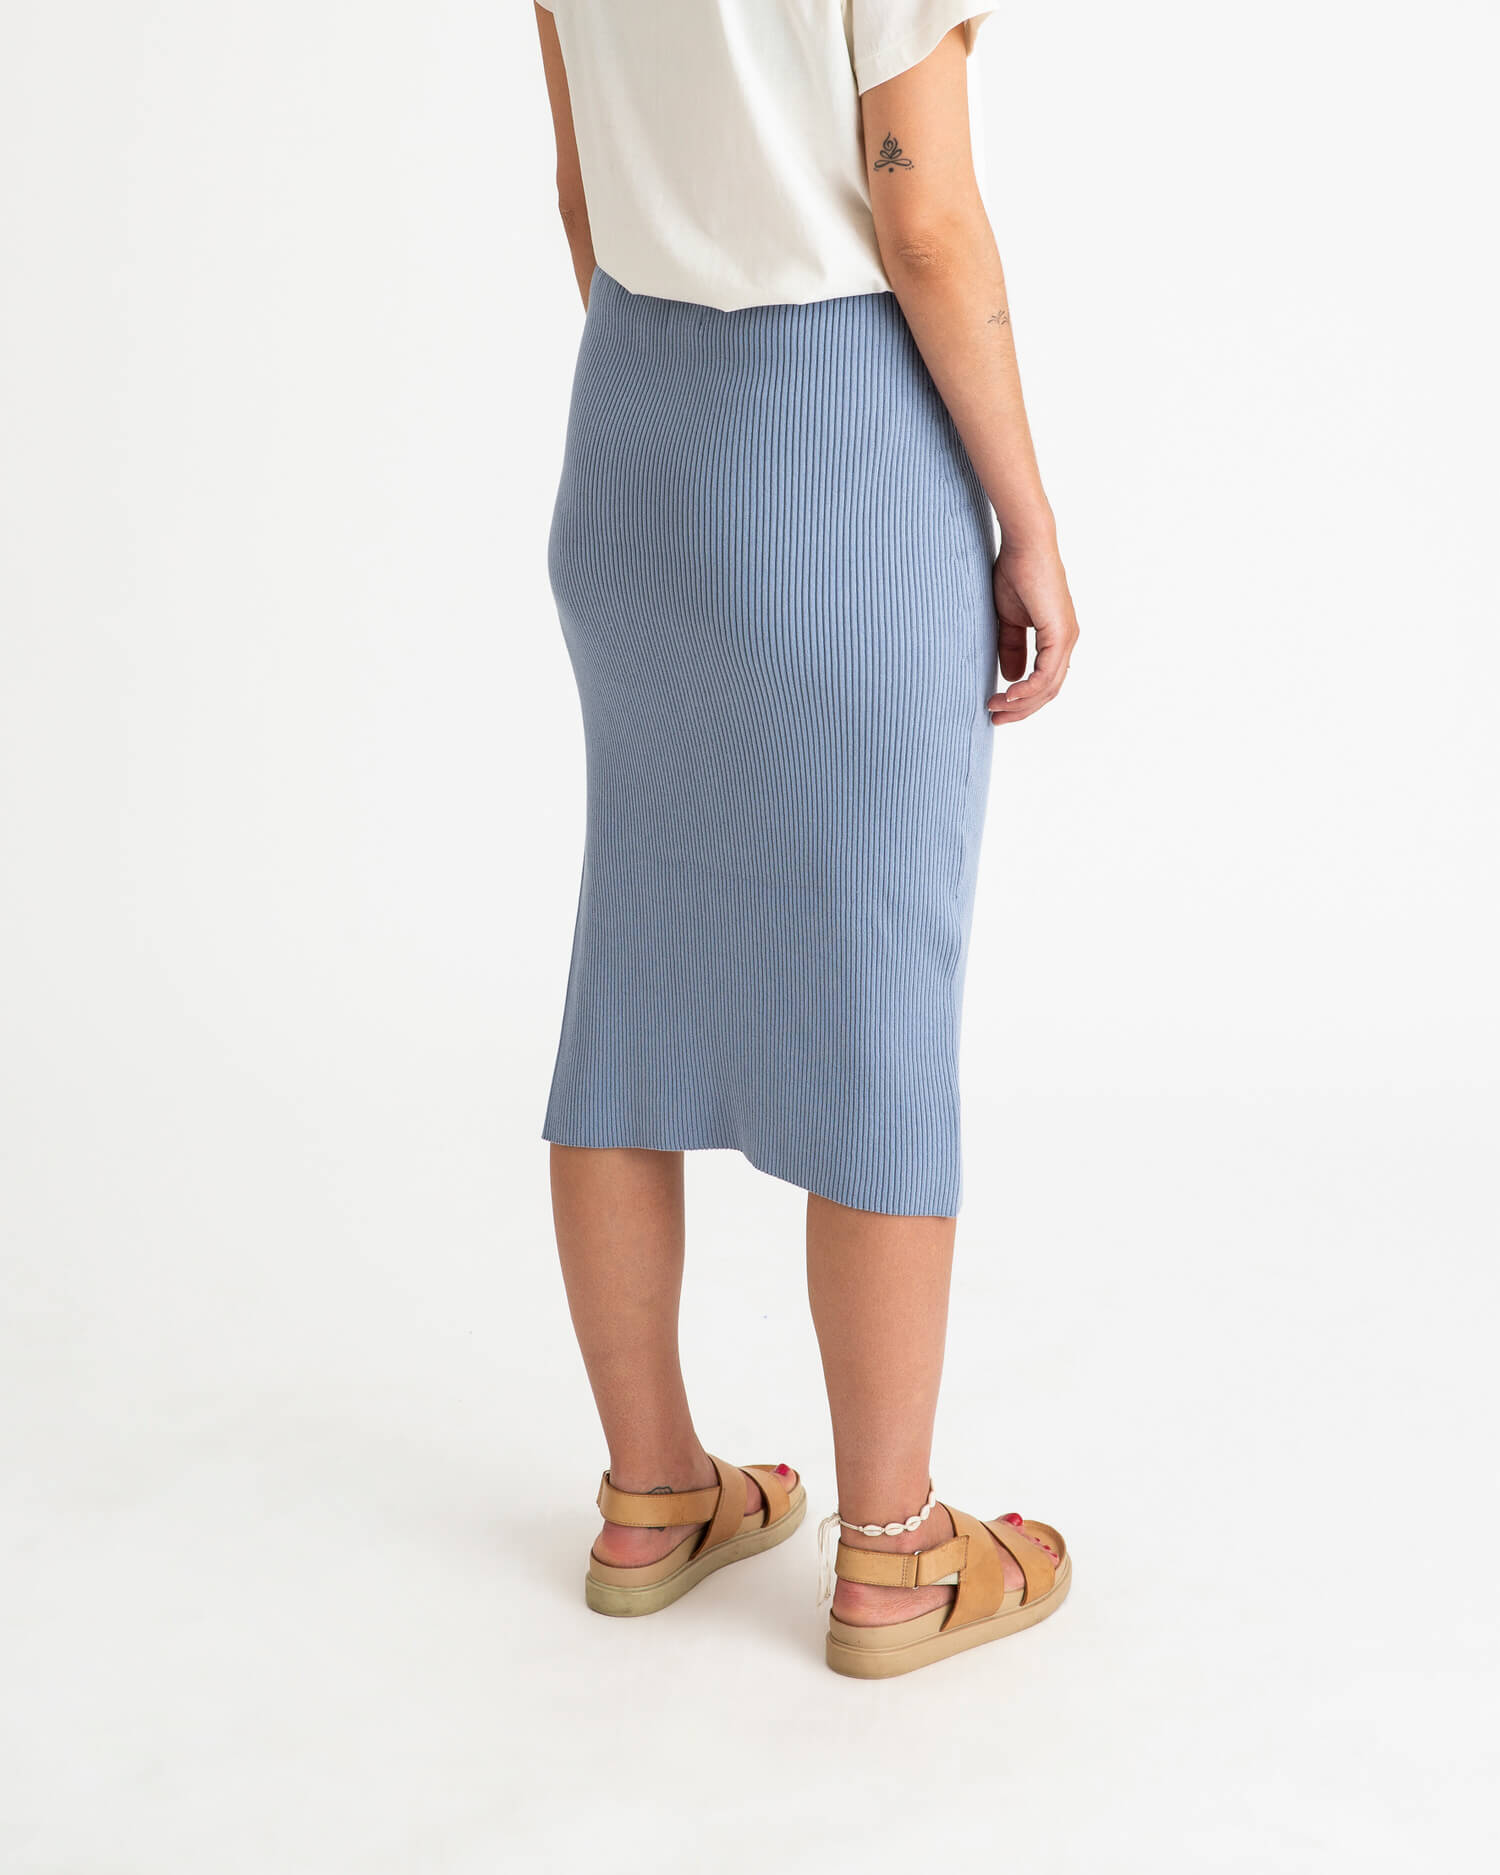 Blue skirt made of 100% organic cotton from Matona